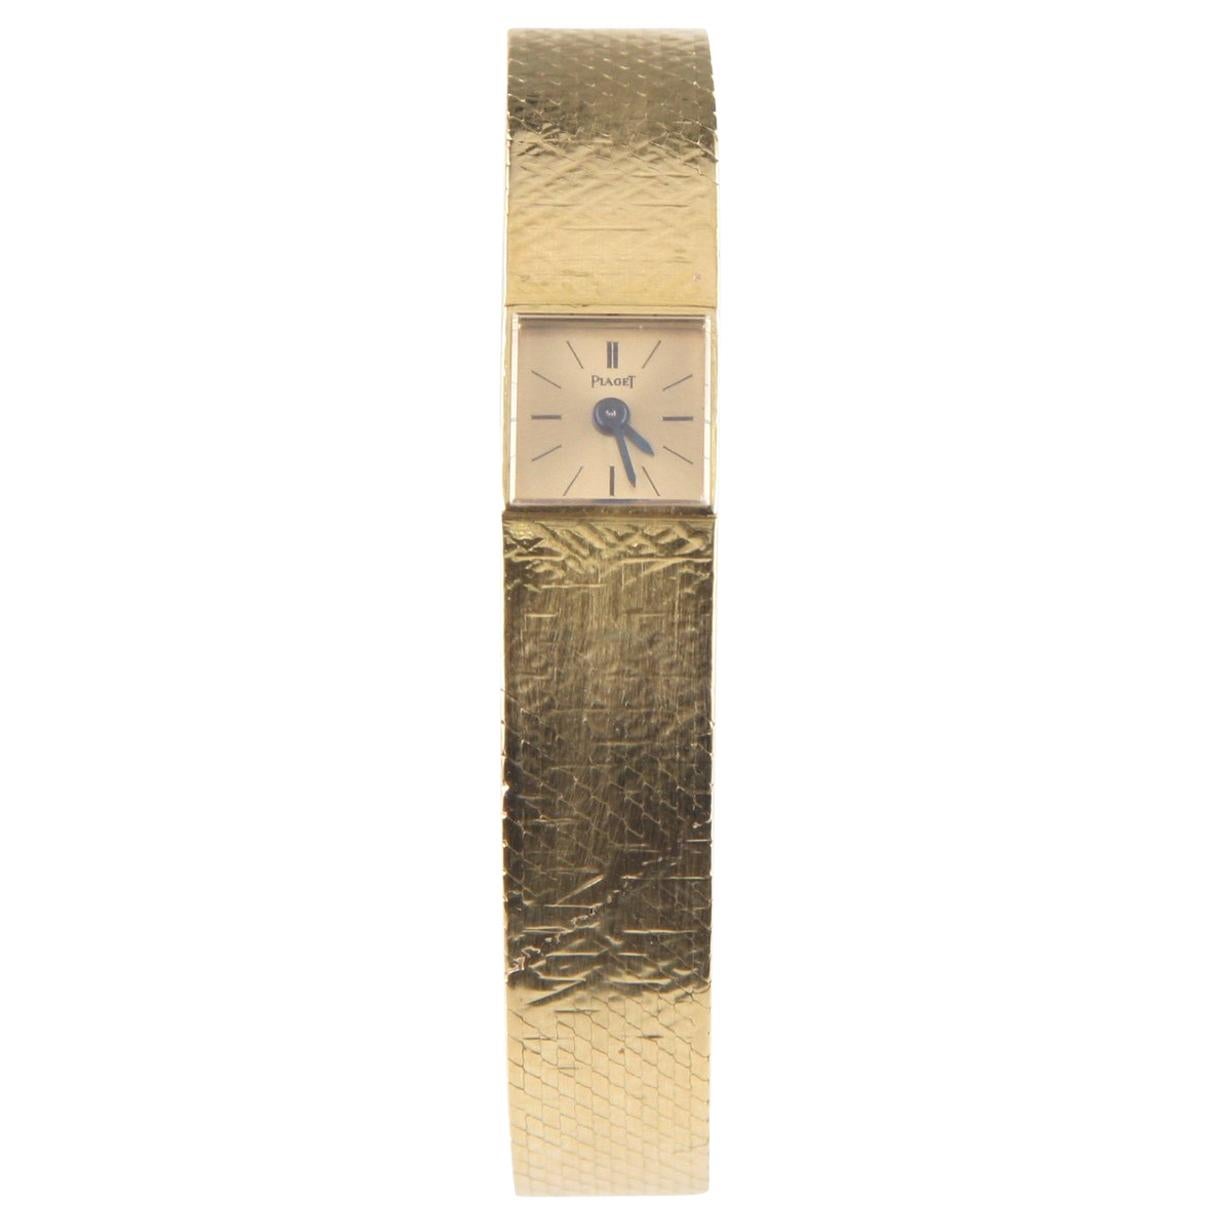 Piaget Women's Solid 18 Karat Yellow Gold Vintage Hand-Winding Watch